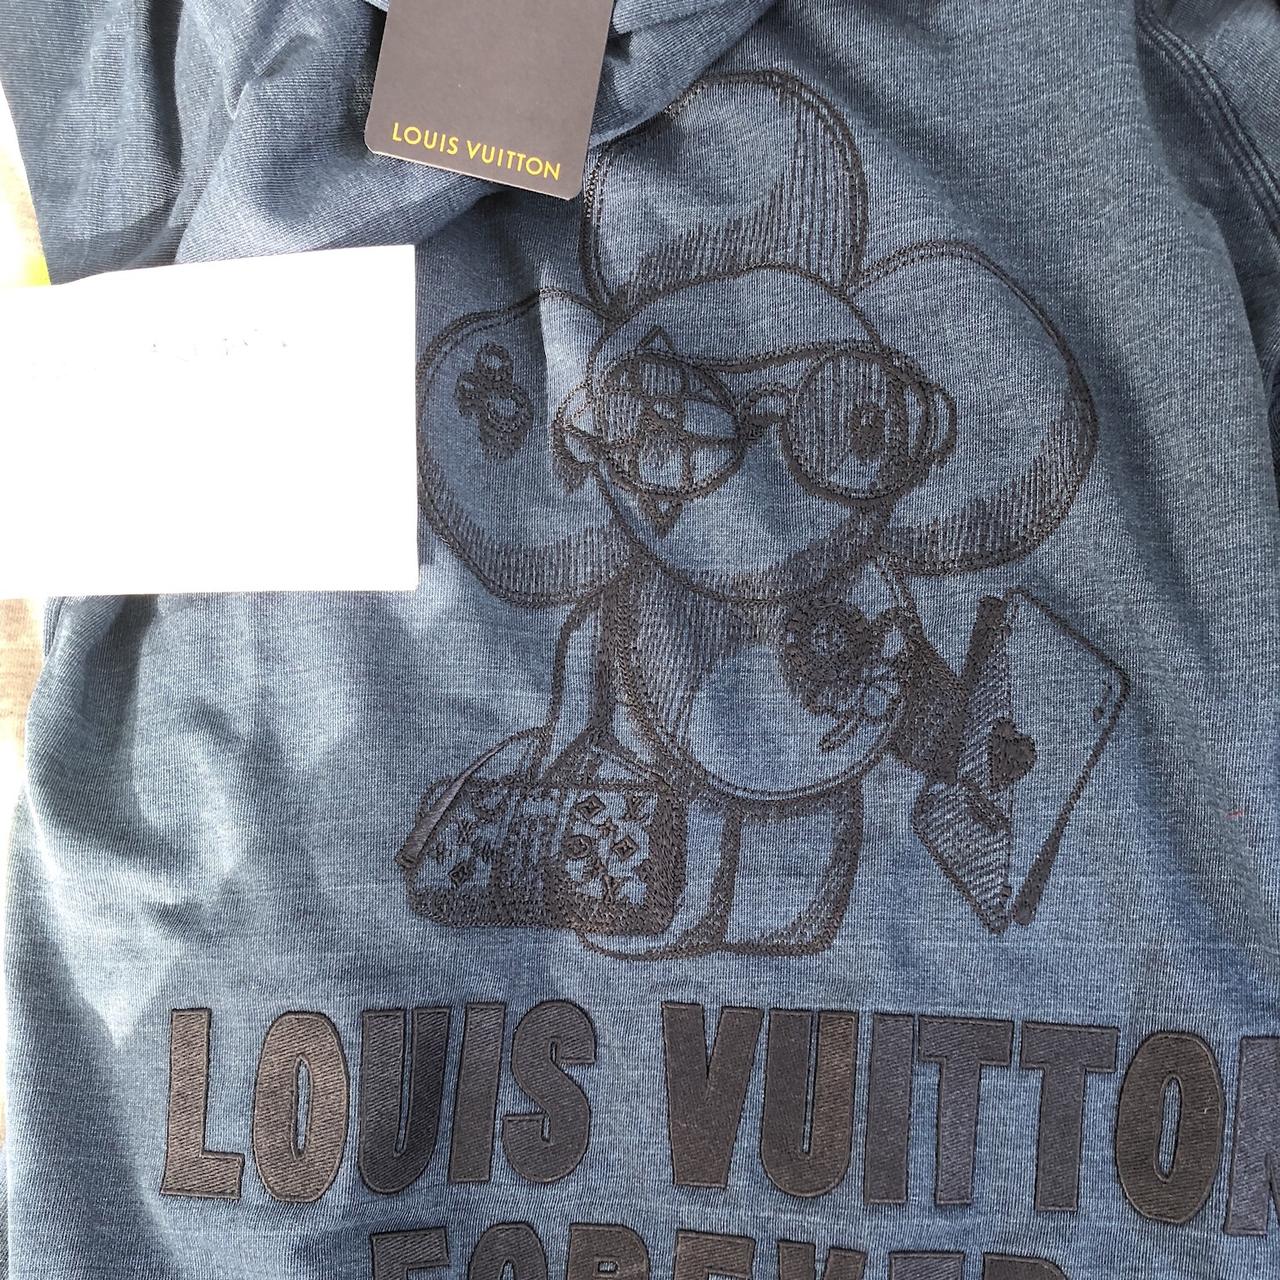 Louis Vuitton Forever Sweatshirt Ireland, SAVE 30% 